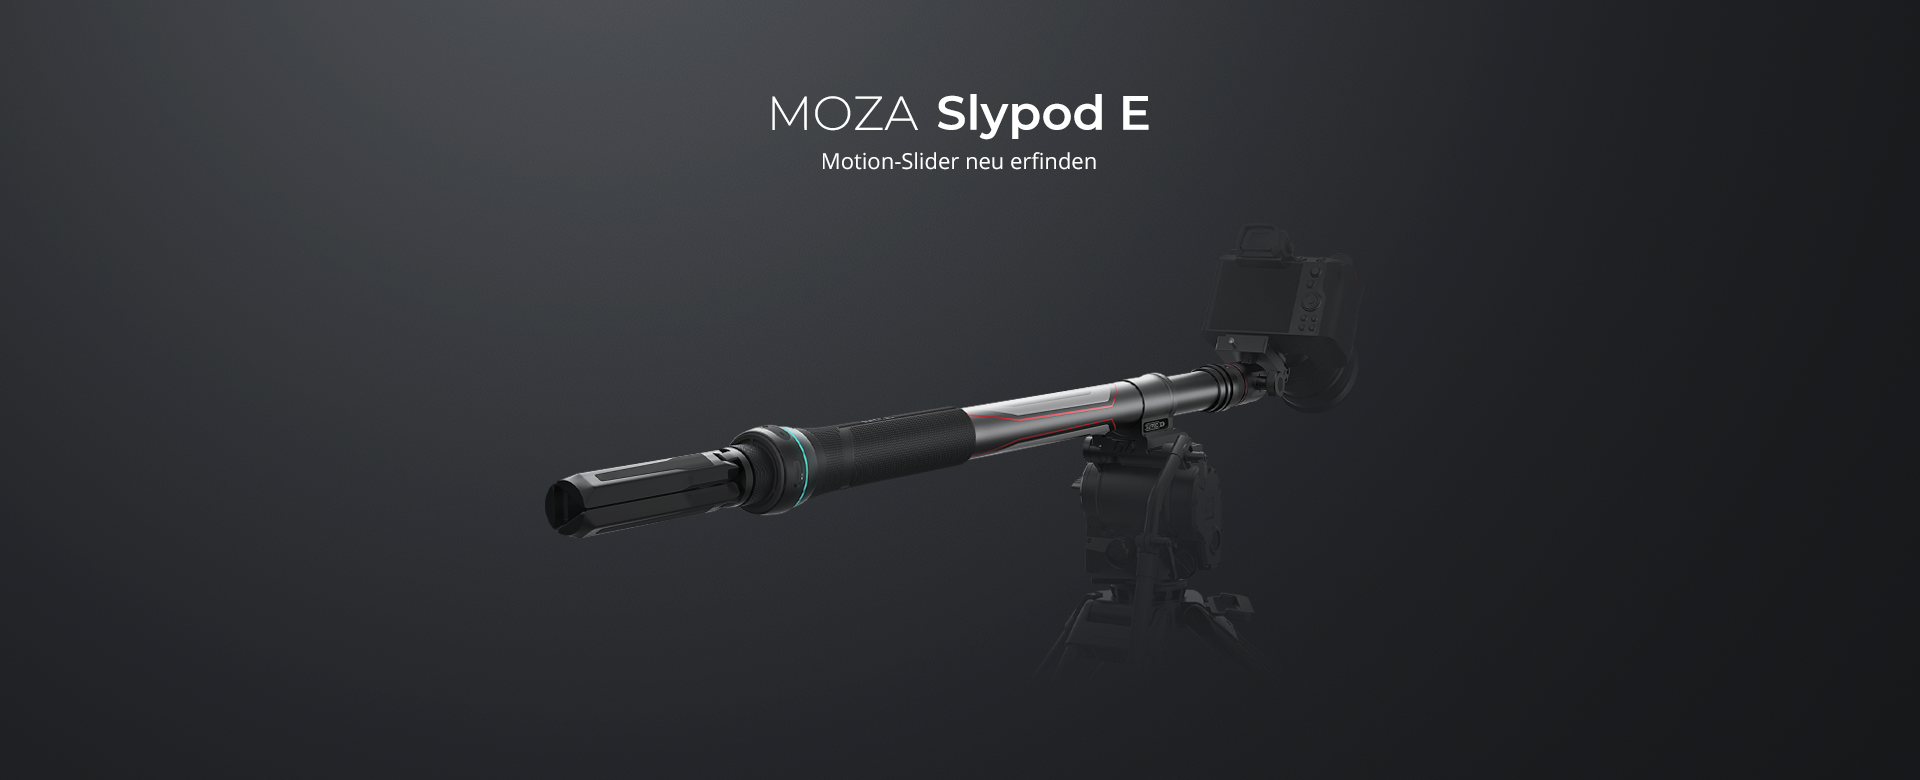 MOZA Slypod E Motion-Slider neu erfinden